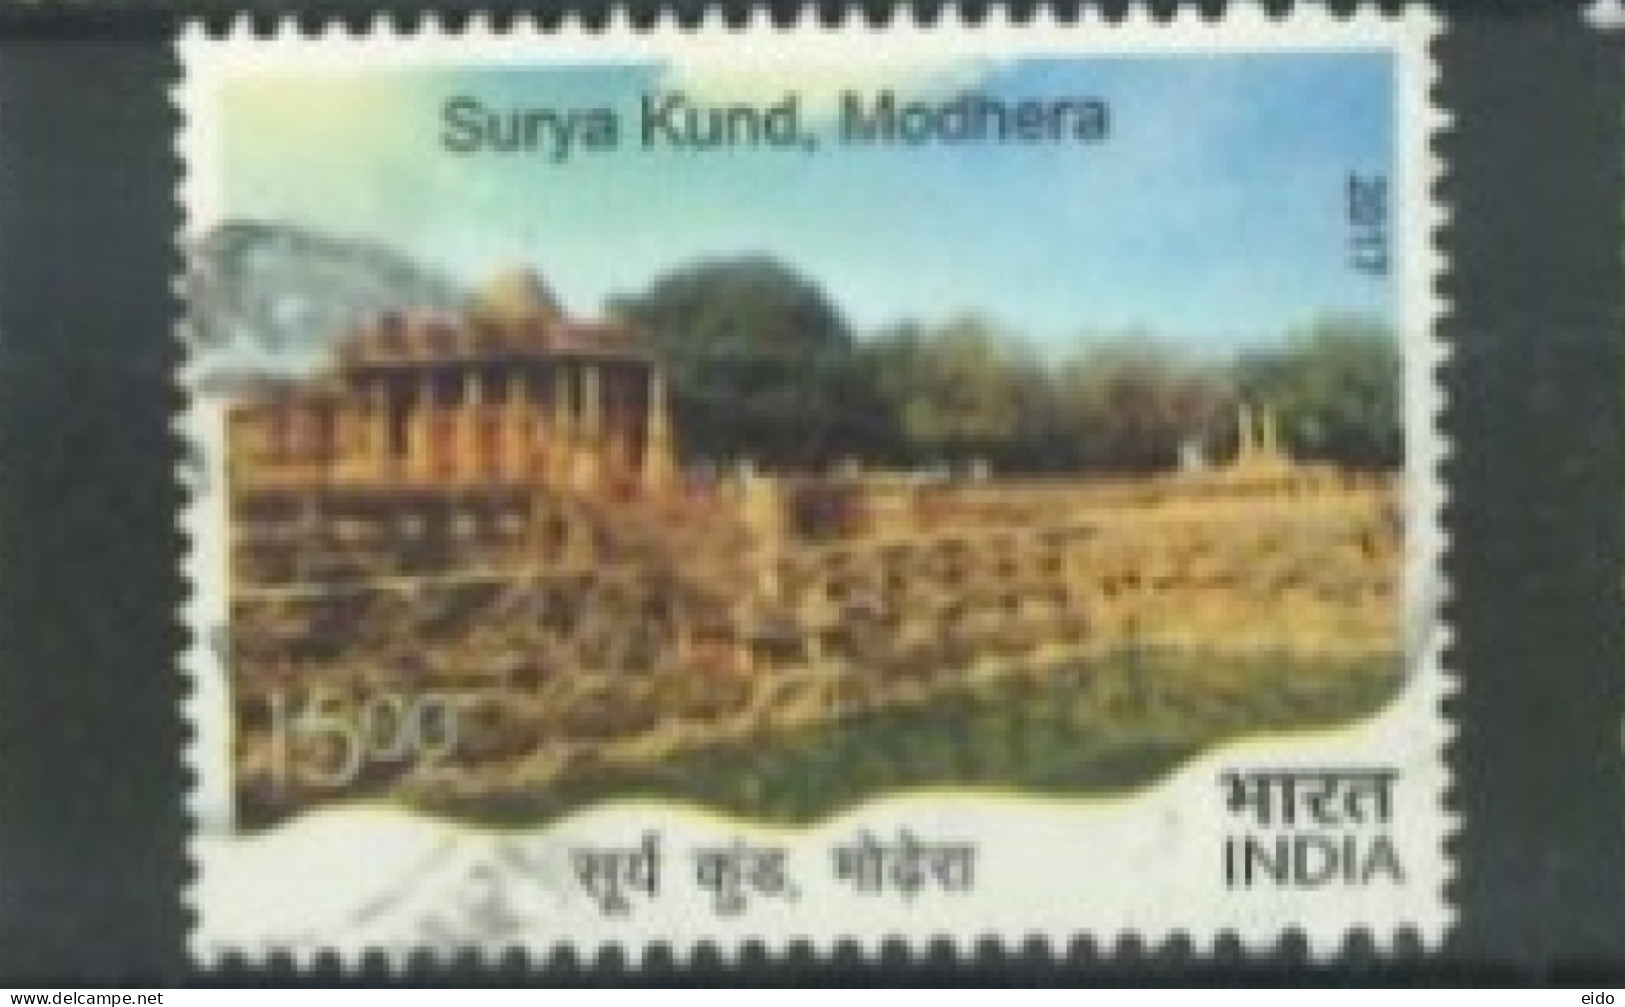 INDIA  - 2017,  SURYA KUND MODHERA STAMP, USED. - Used Stamps